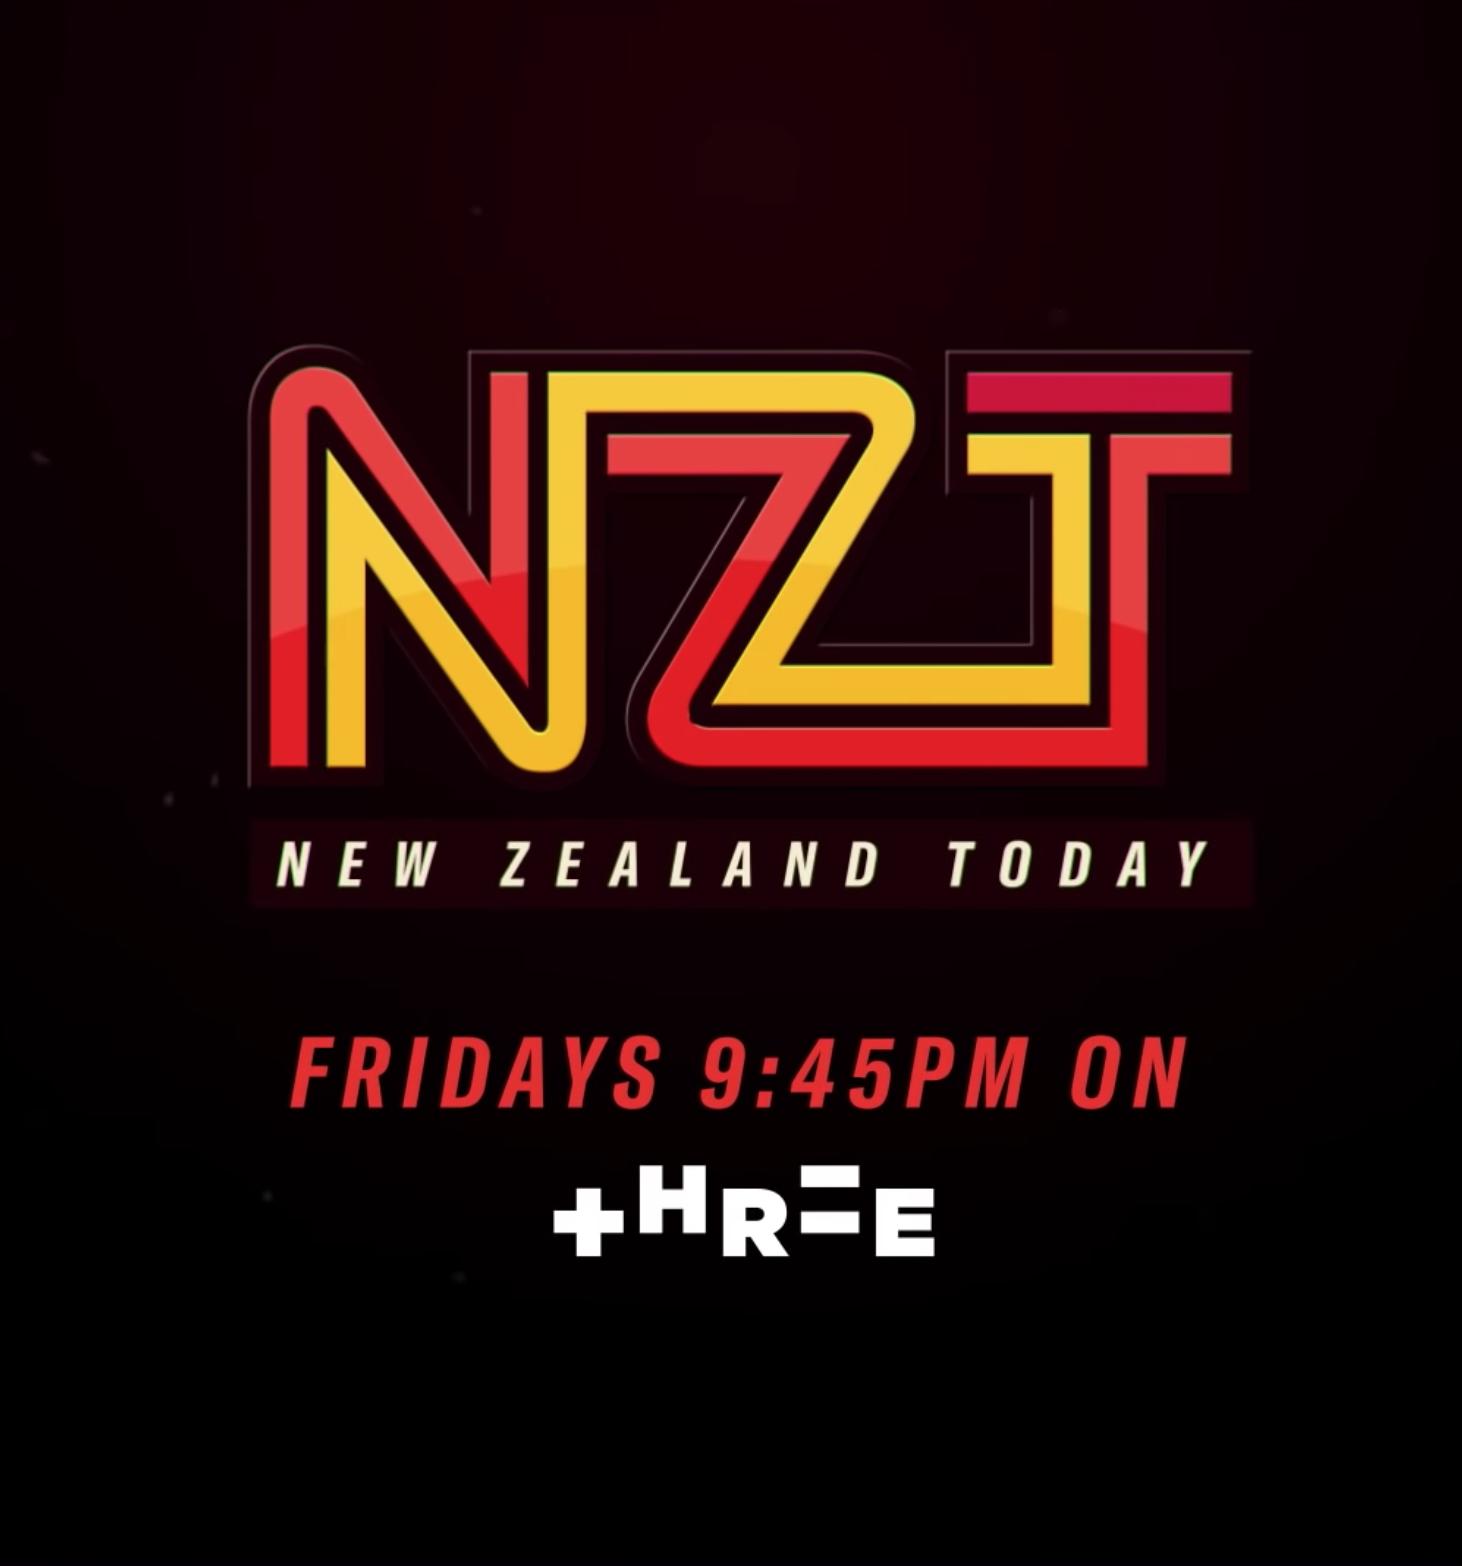 New Zealand Today 4X4